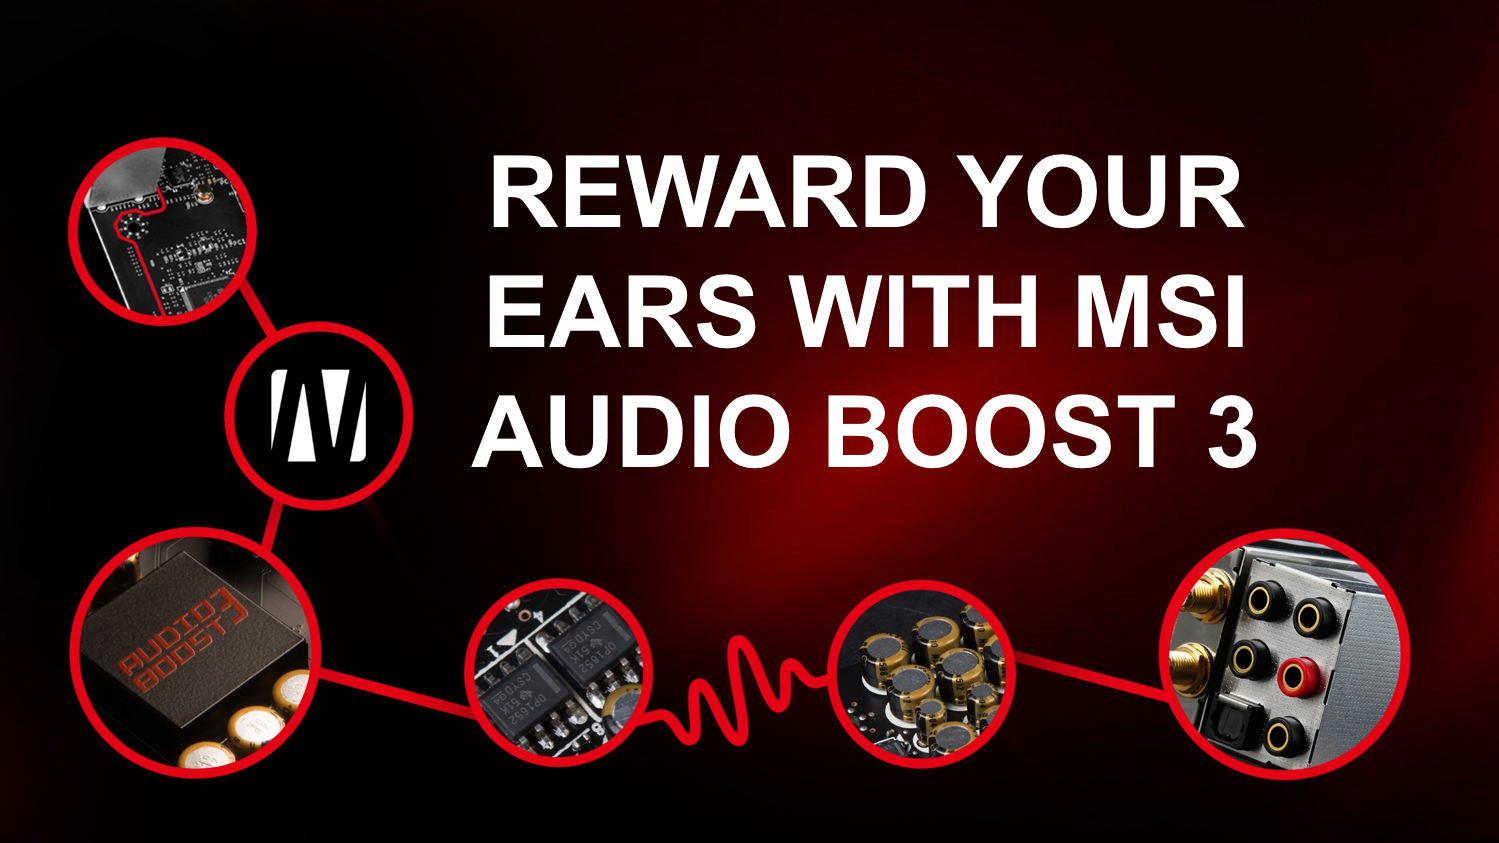 Audio Boost 3 reward